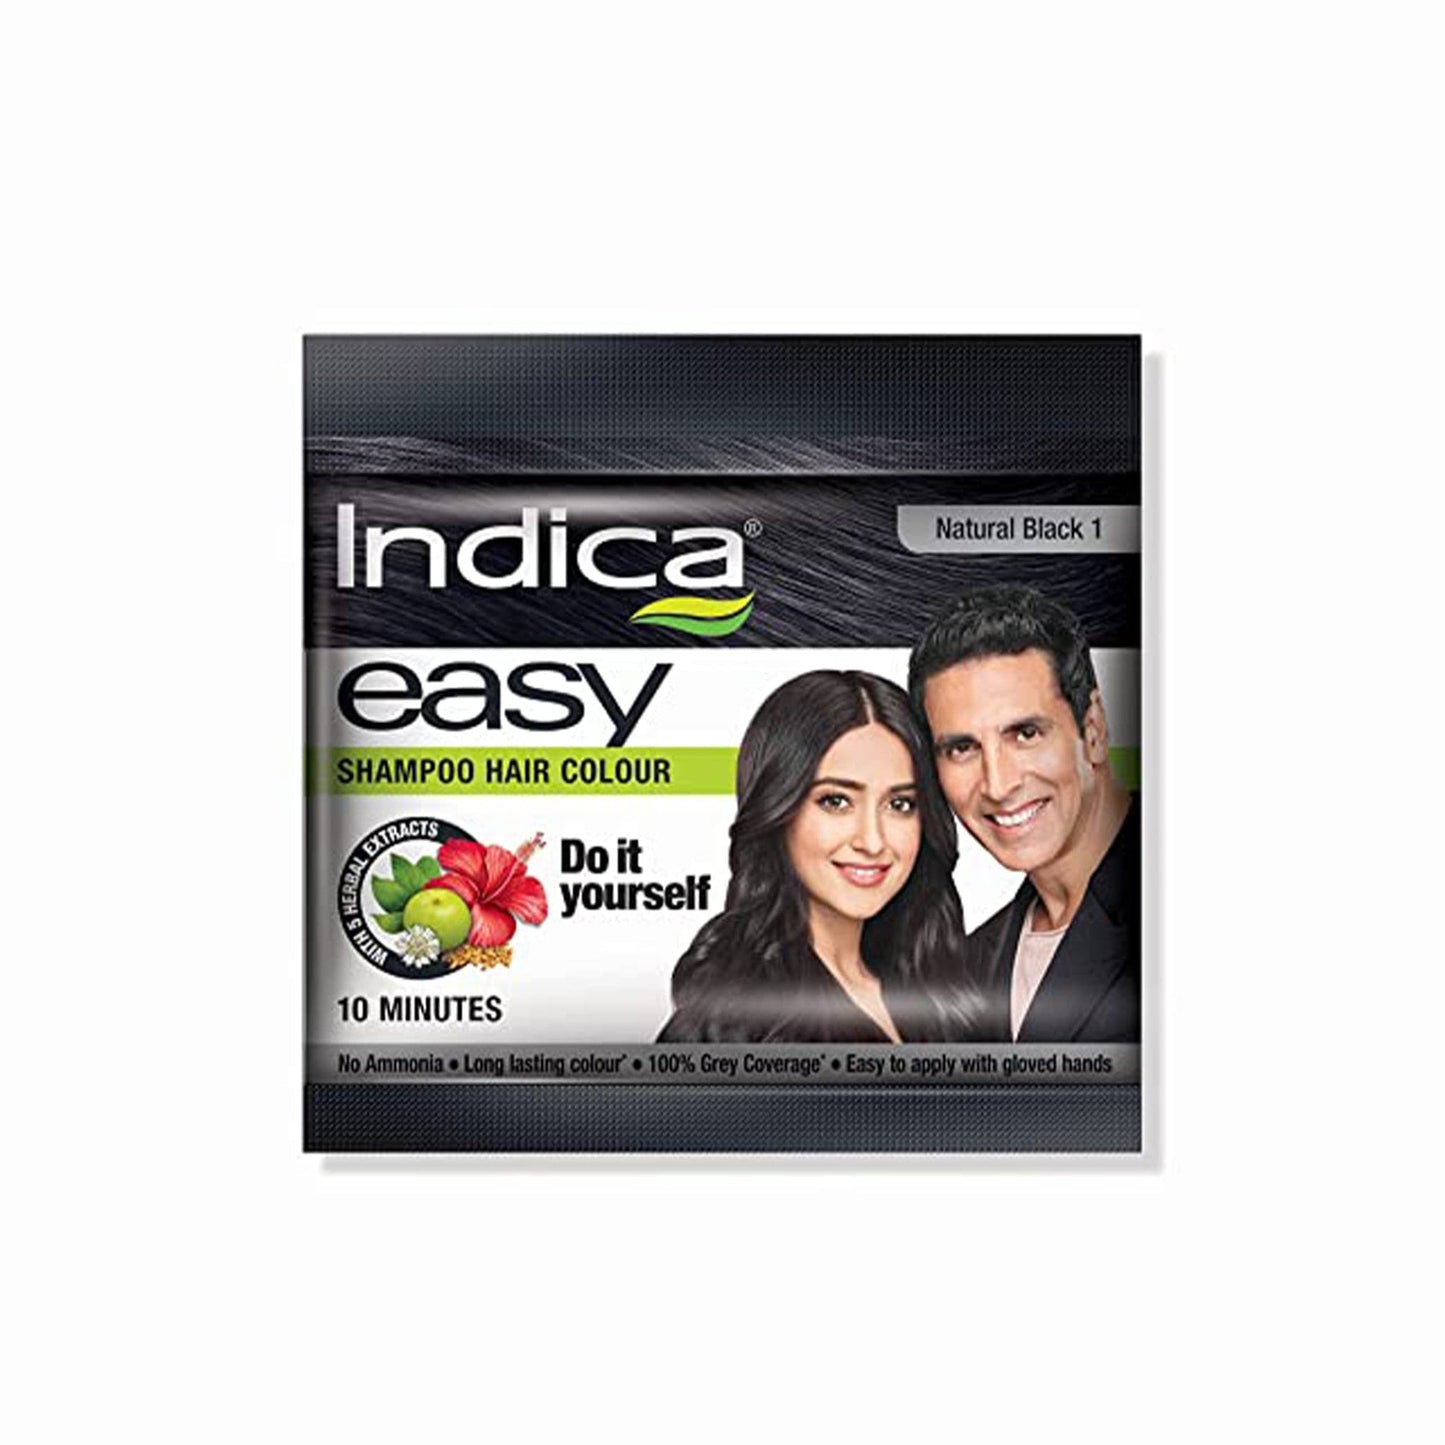 Indica Easy Hair Colour Shampoo.